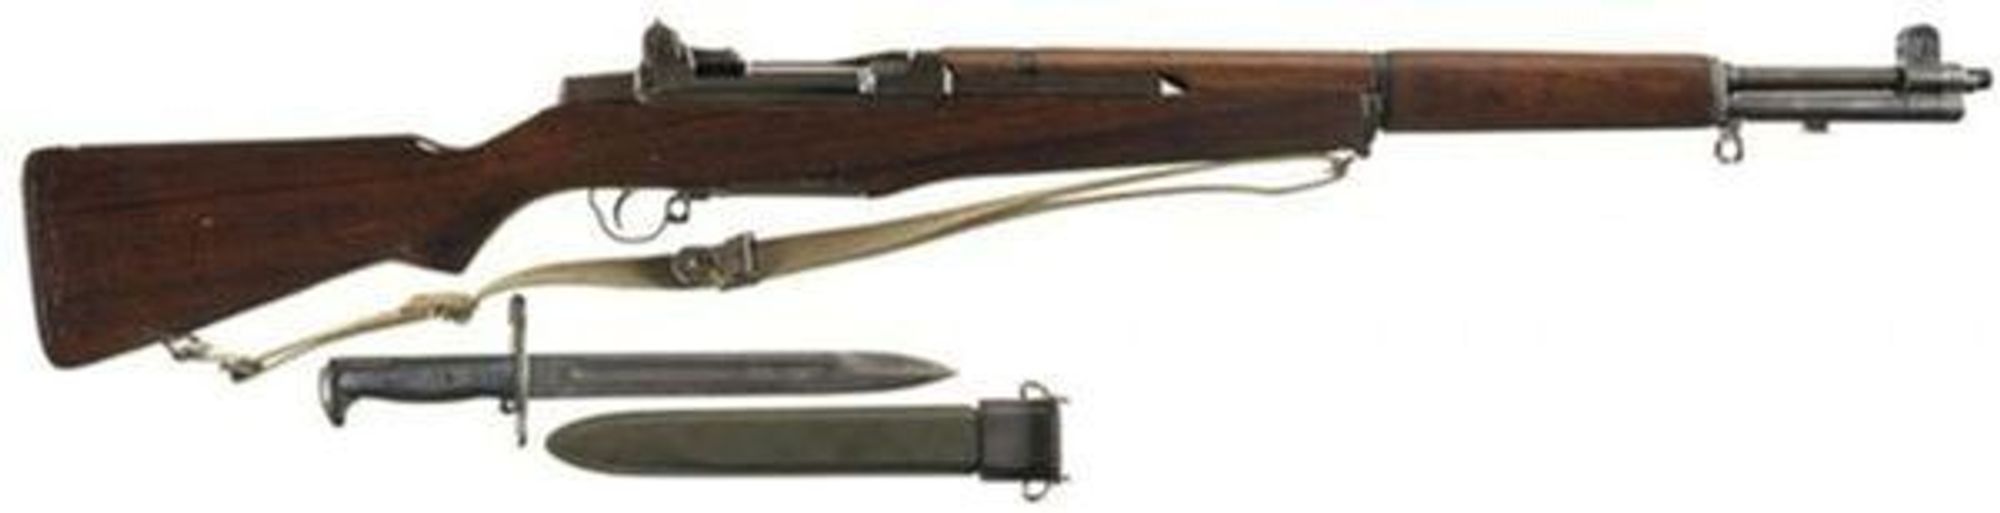 WW2 M1 Garand rifle bayonet sling